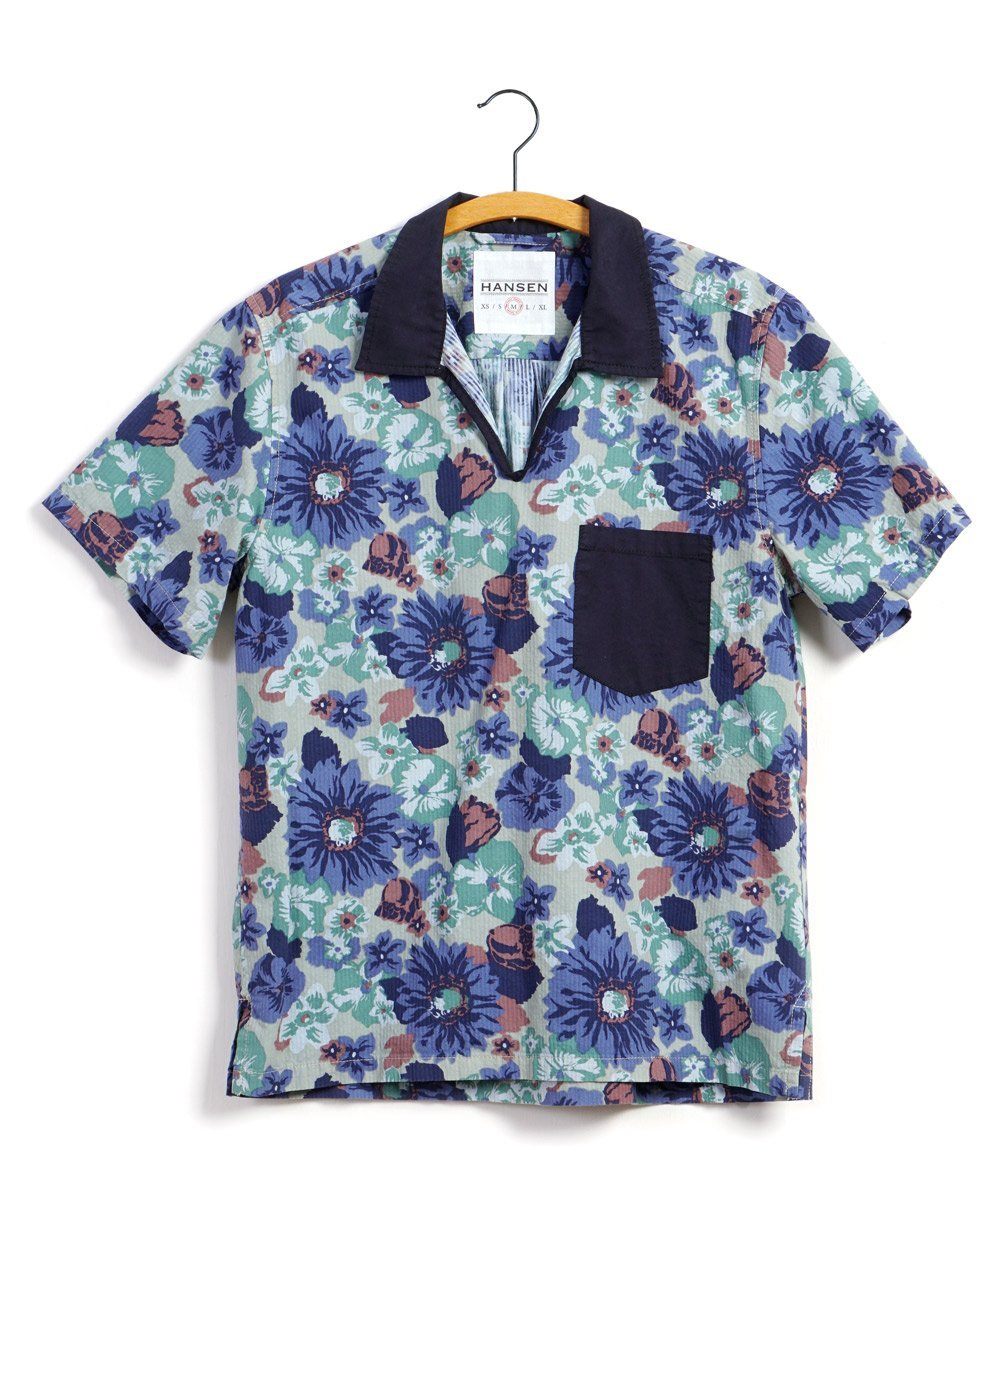 PHILLIP | Short Sleeve Pull-On Shirt | Flower/Navy -HANSEN Garments- HANSEN Garments